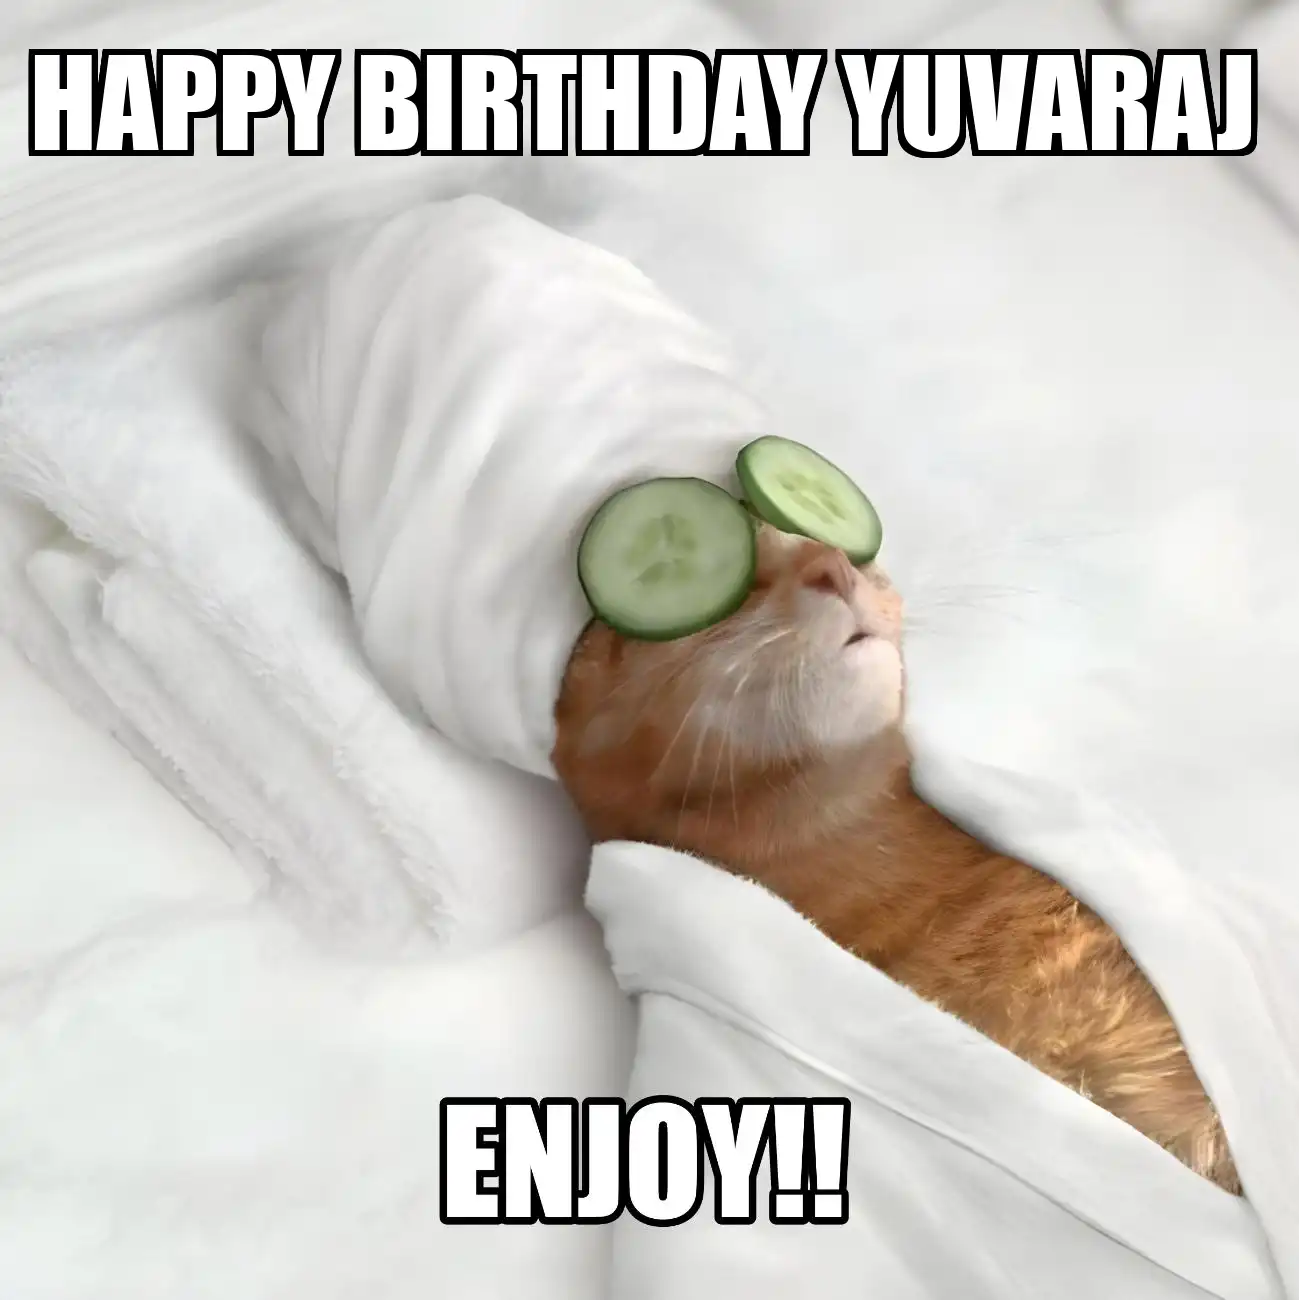 Happy Birthday Yuvaraj Enjoy Cat Meme